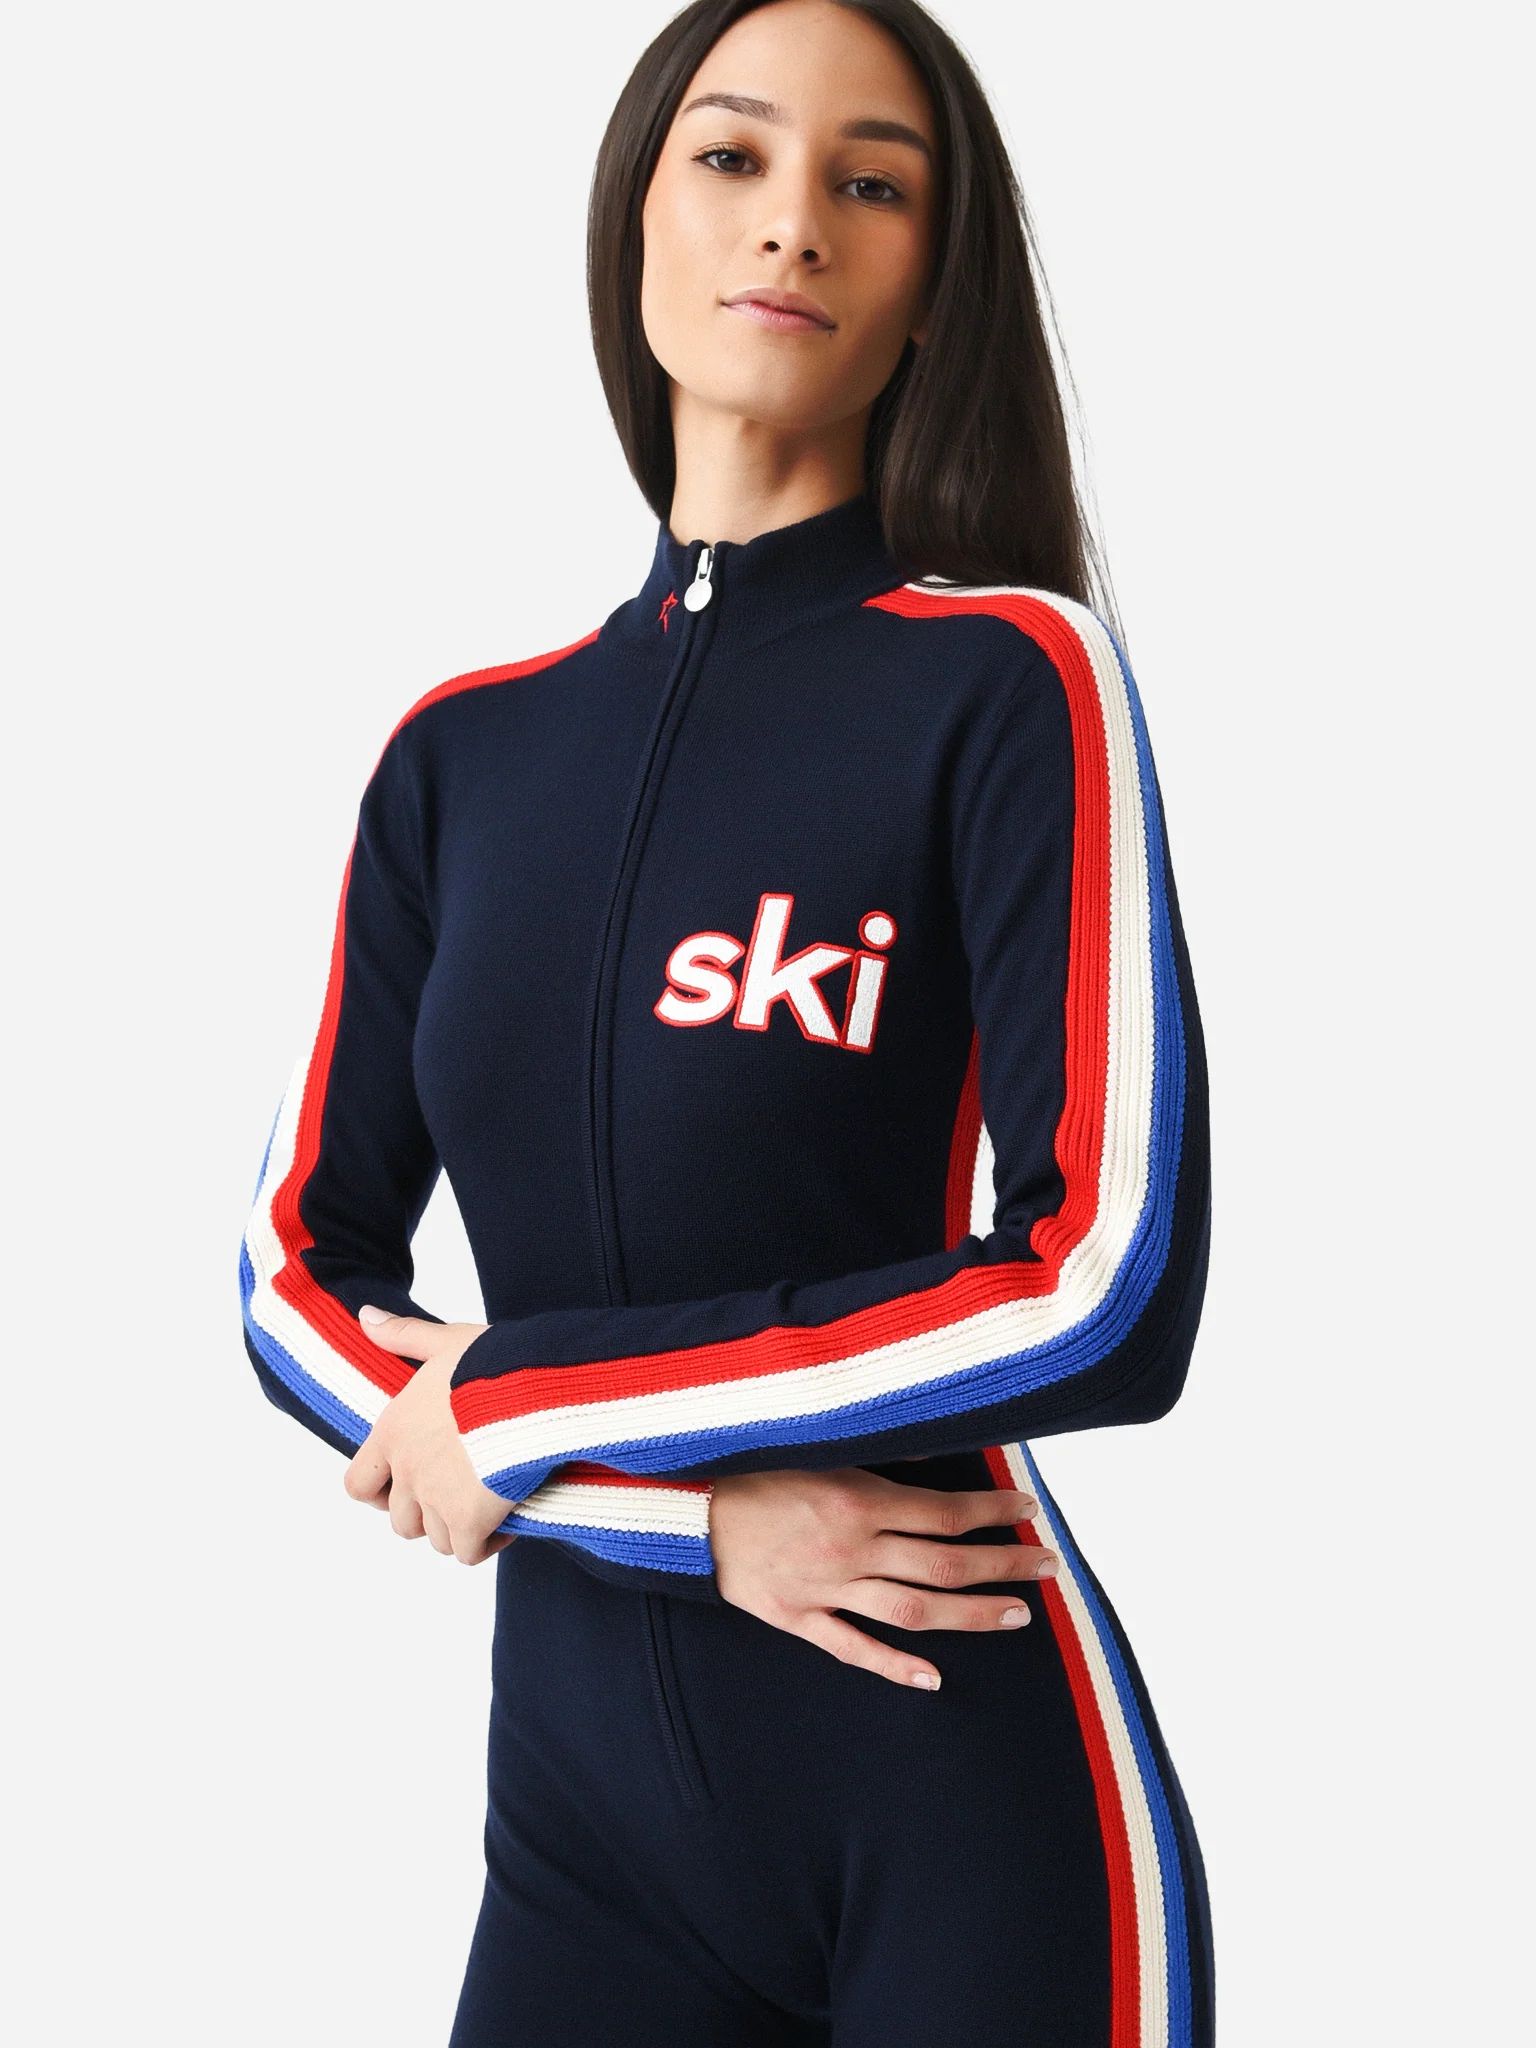 Perfect Moment Women's Ski Team Jumpsuit | Saint Bernard